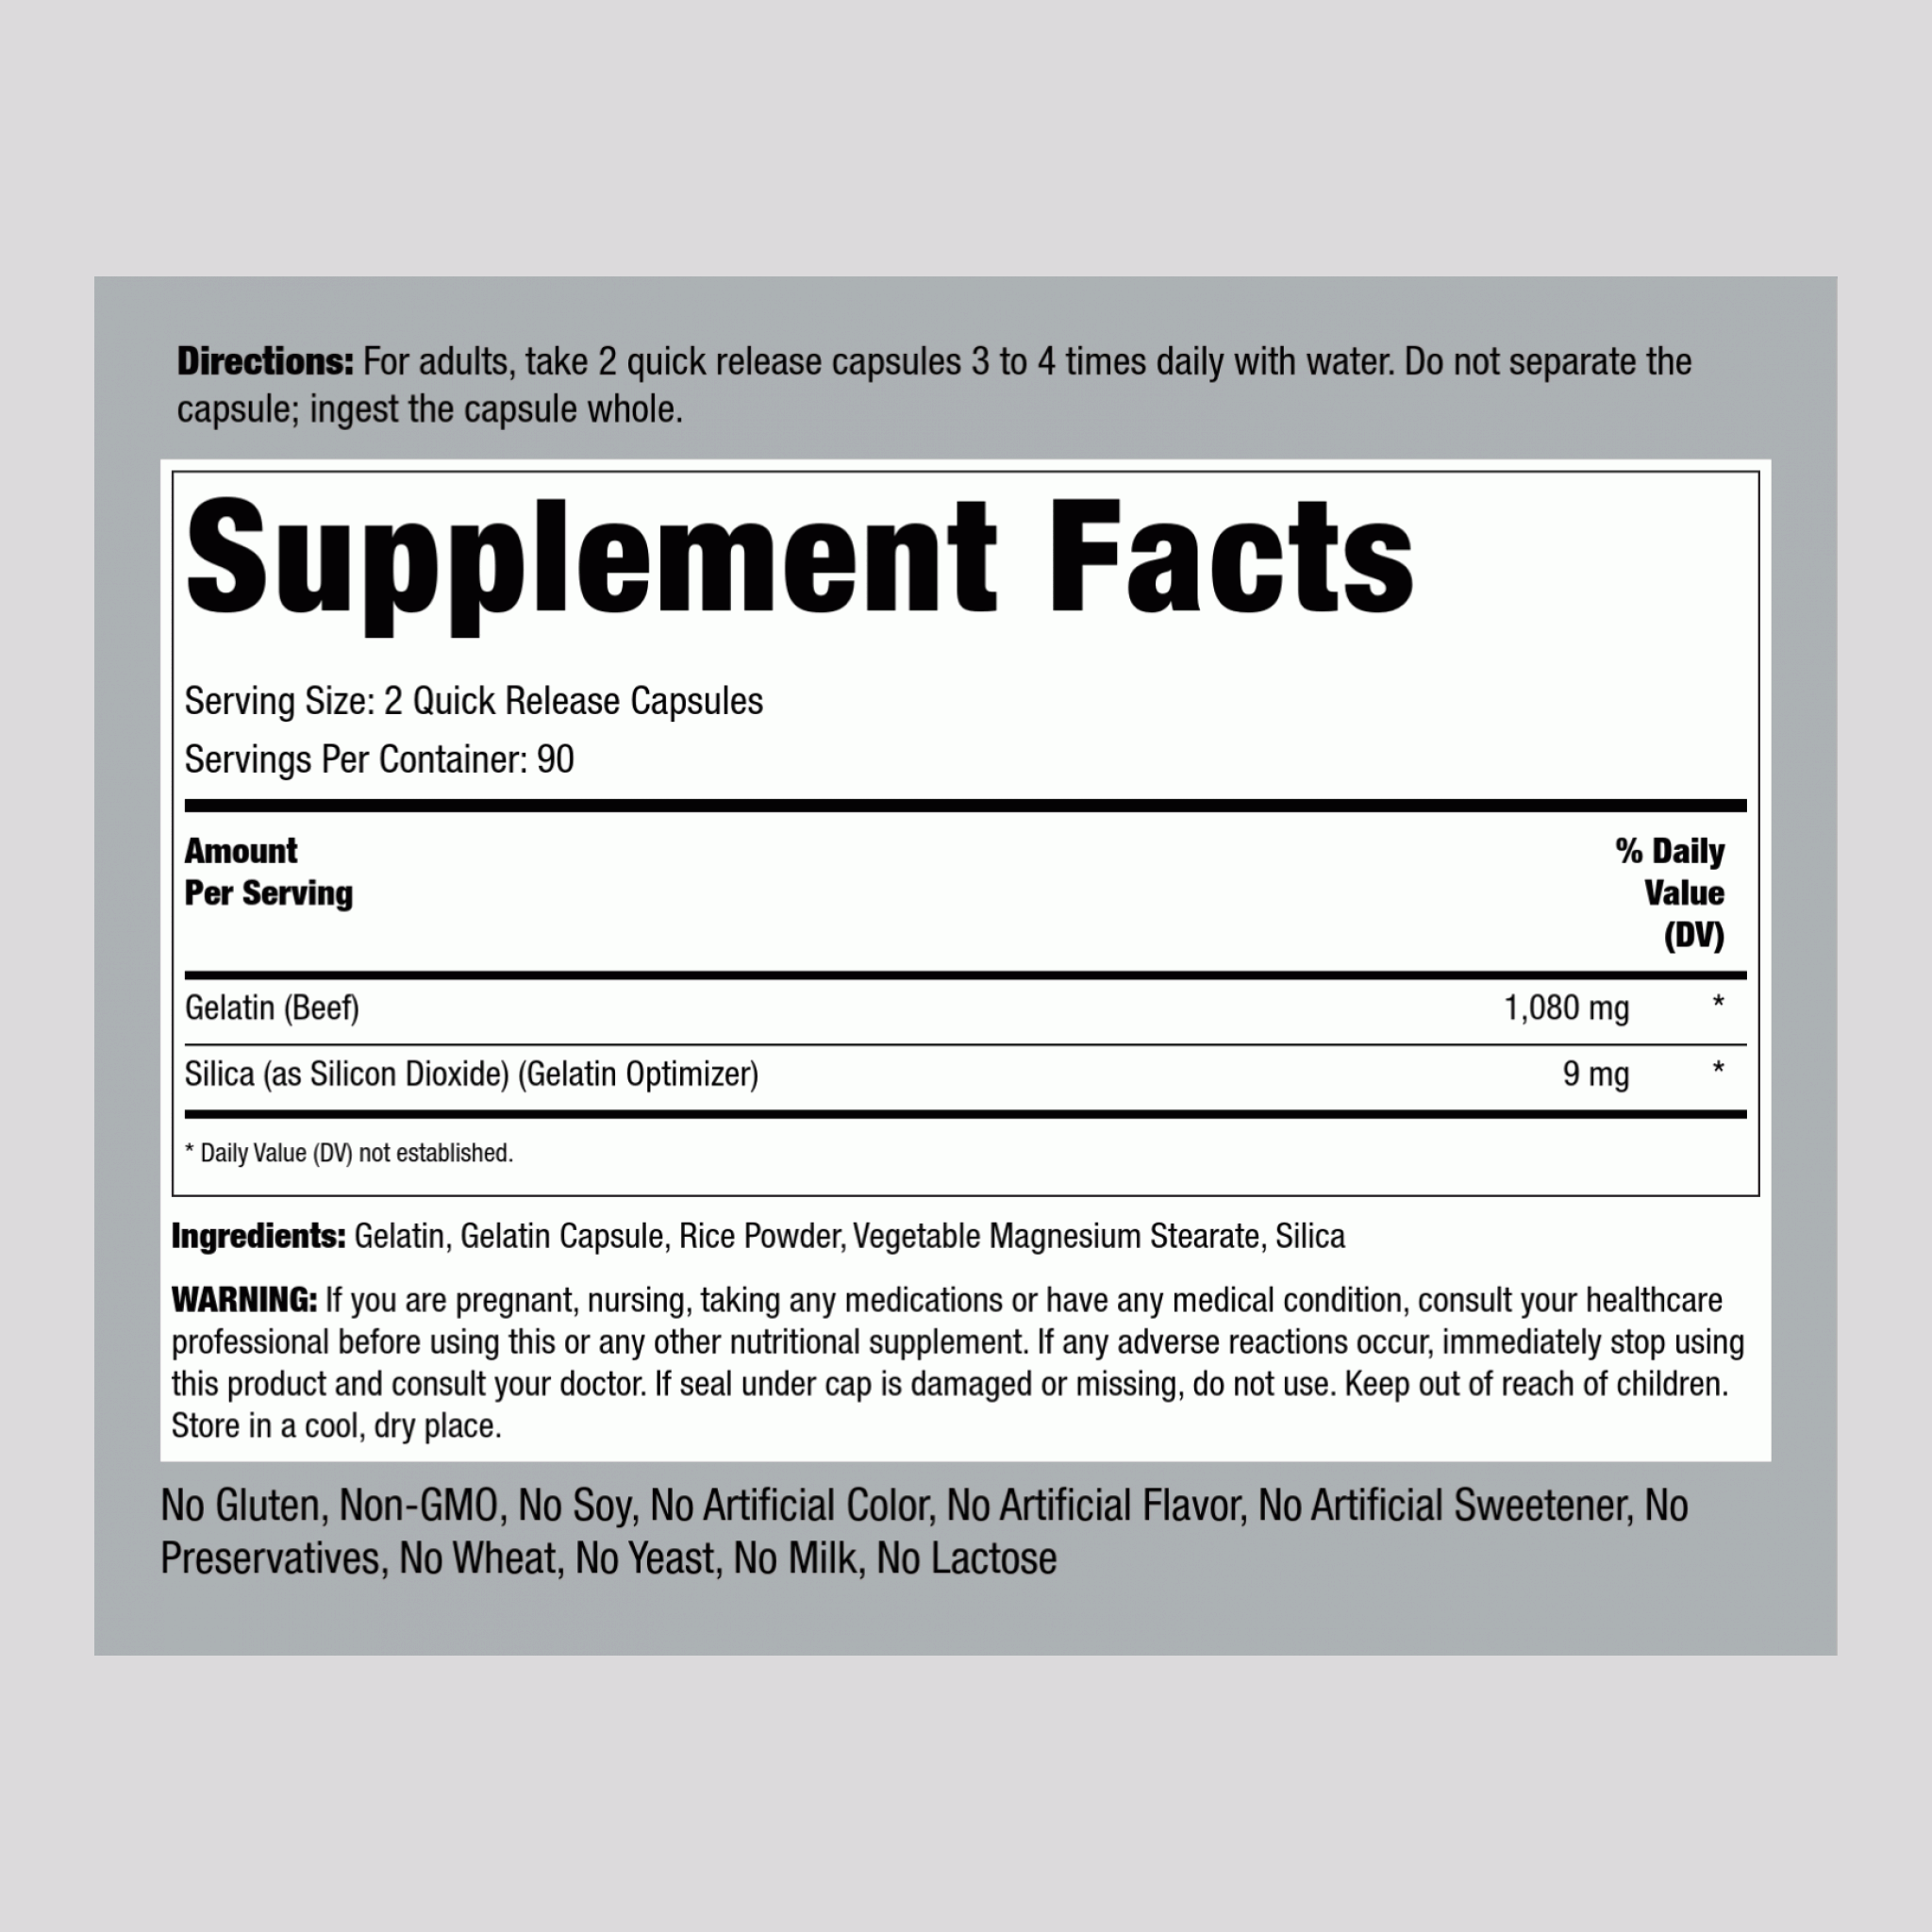 Gelatin (Beef) plus Silicon Optimizer, 540 mg, 180 Quick Release Capsules